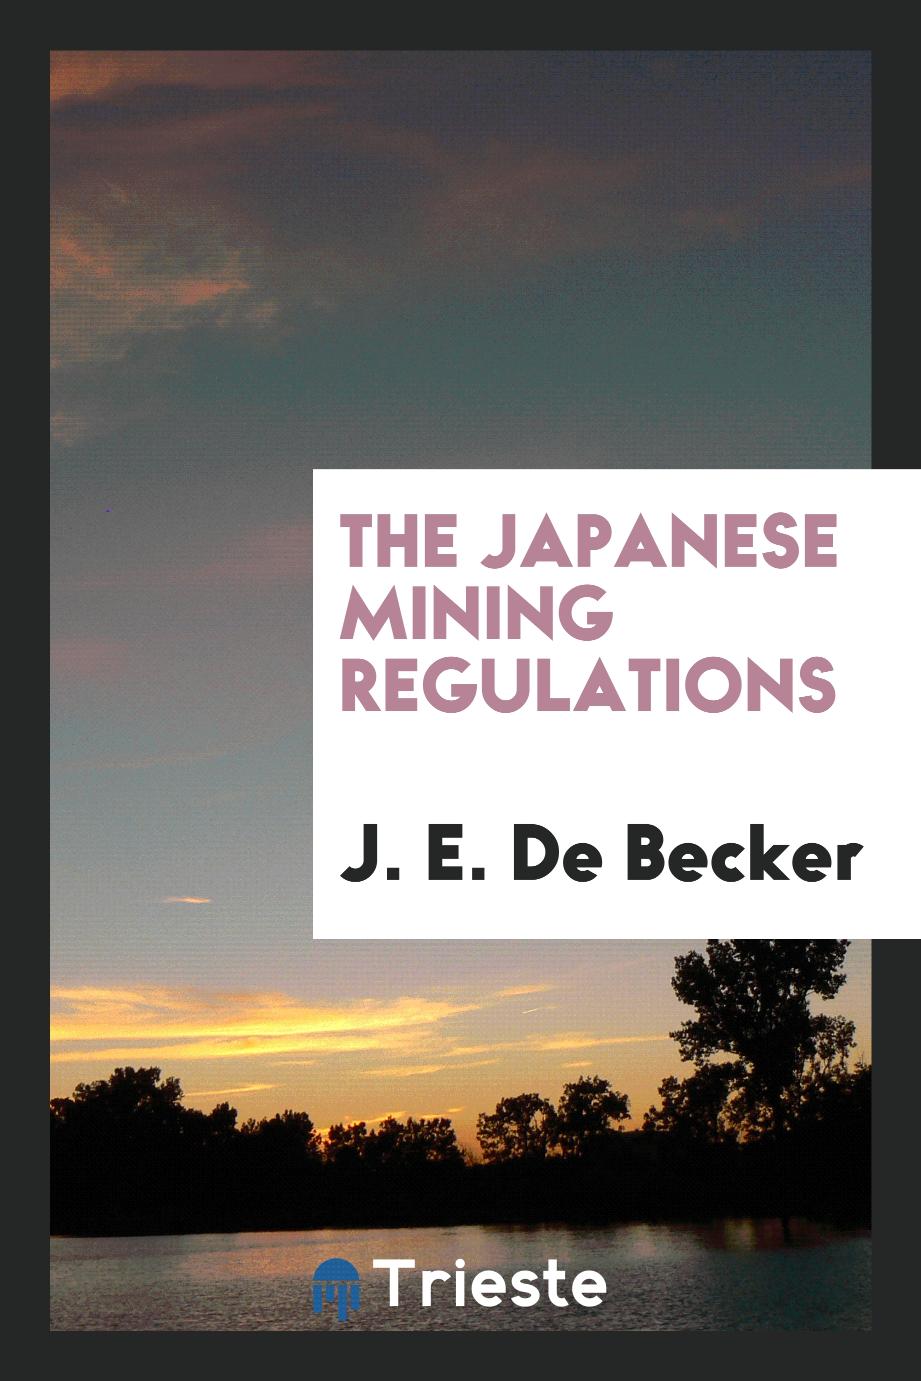 The Japanese mining regulations